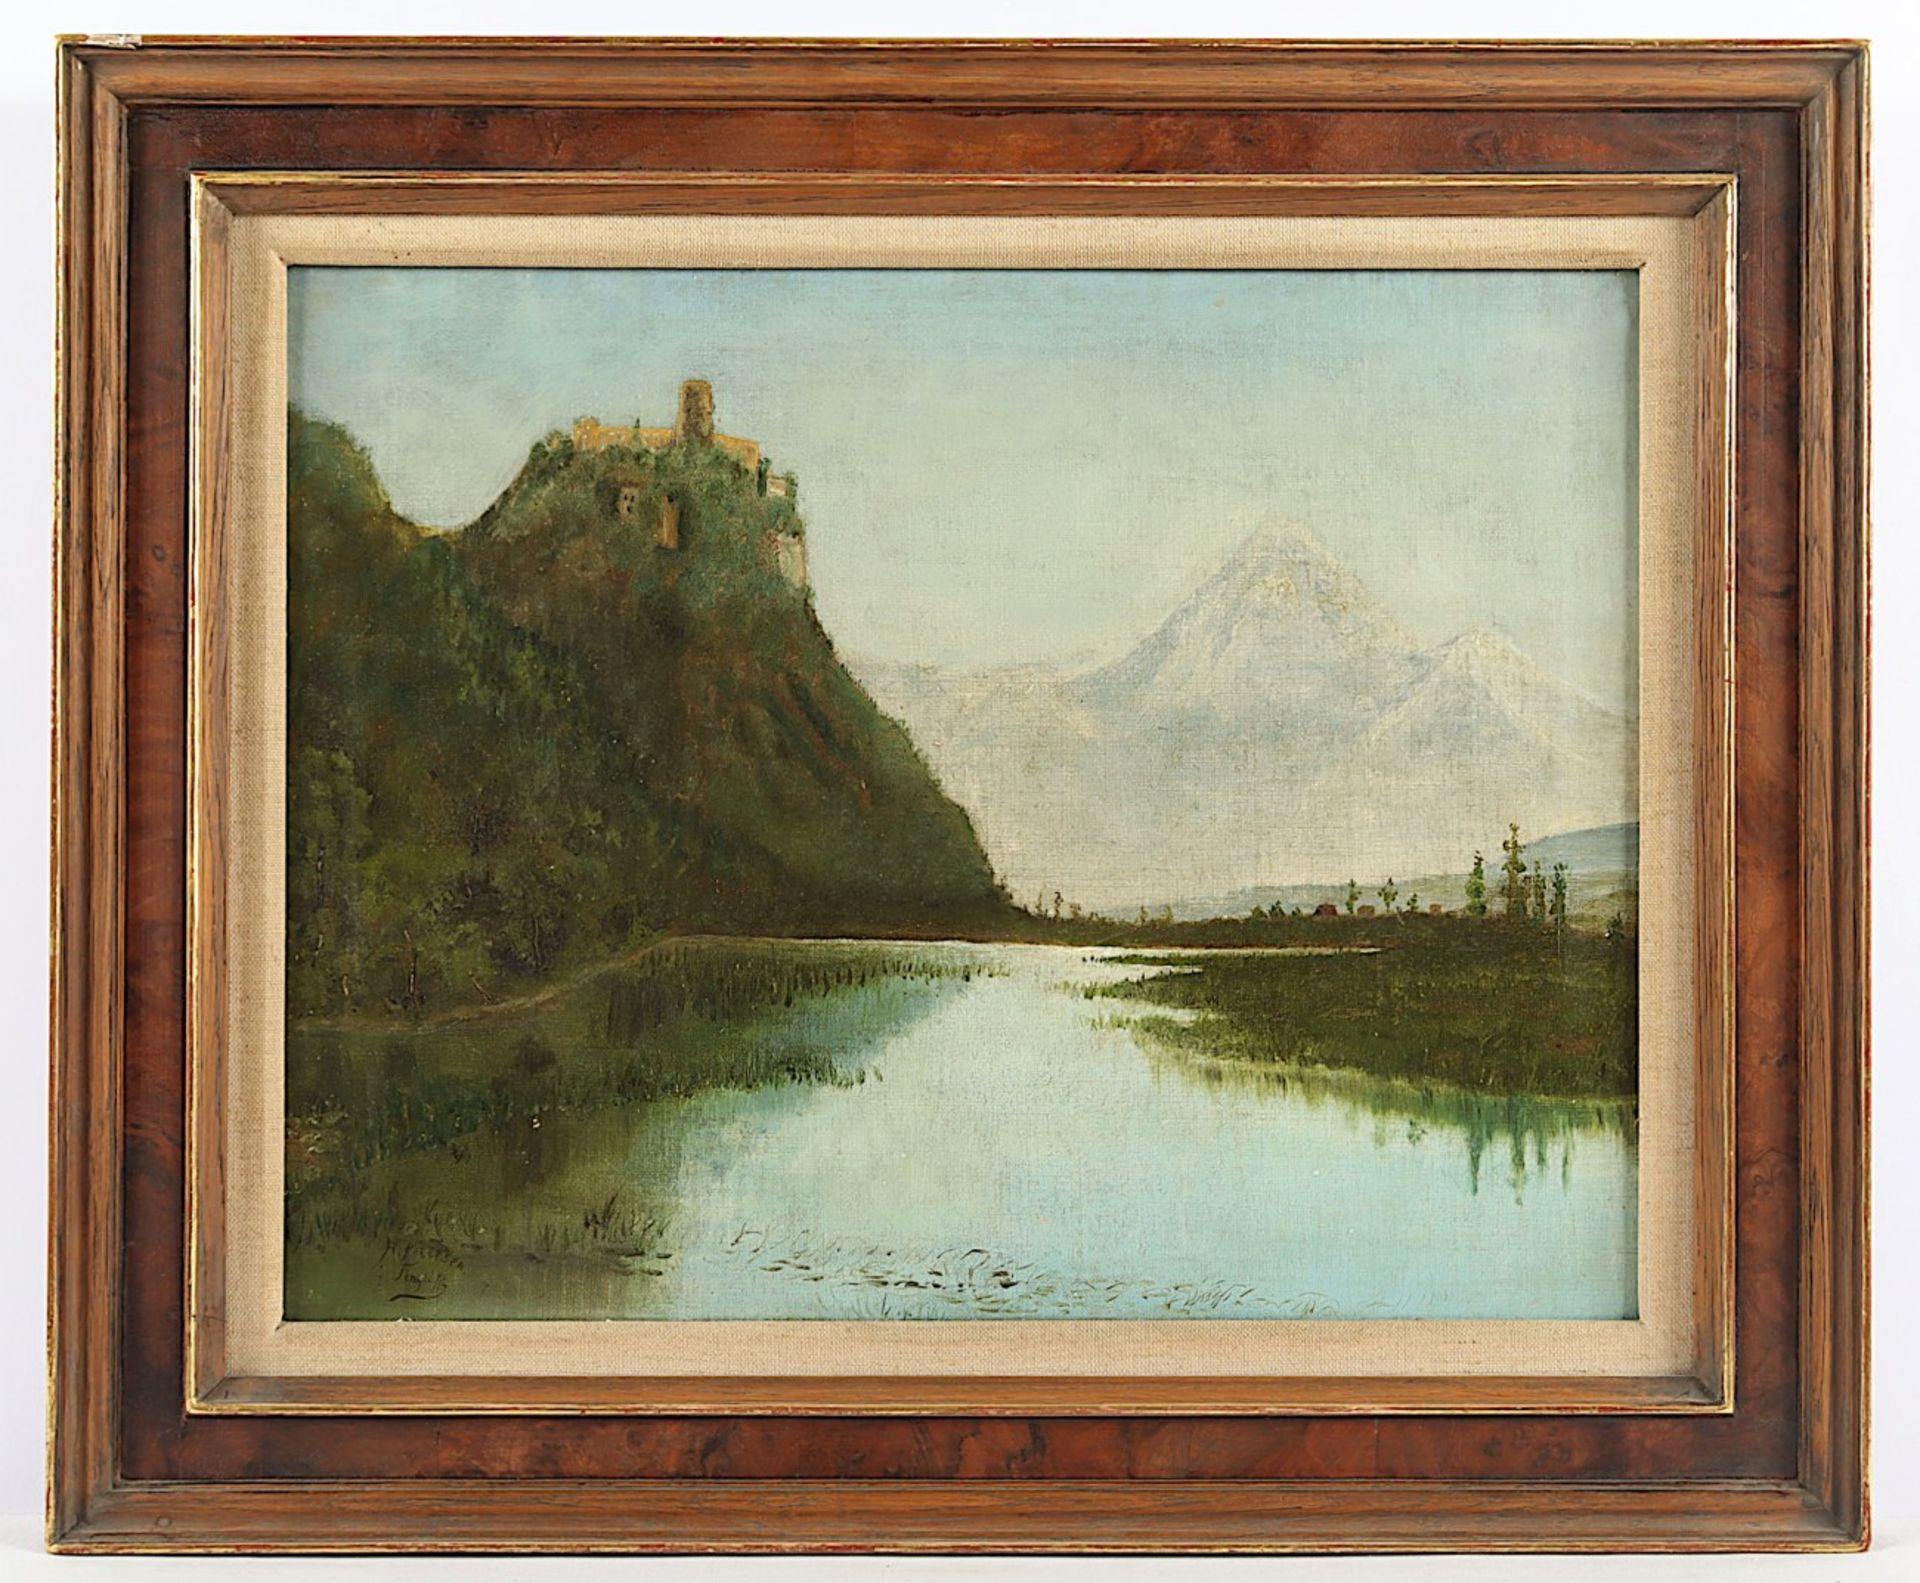 PETERSEN, H. (Maler um 1900), "Alpenlandschaft mit Burg", Öl/Lwd., 34,5 x 45, unten links signiert